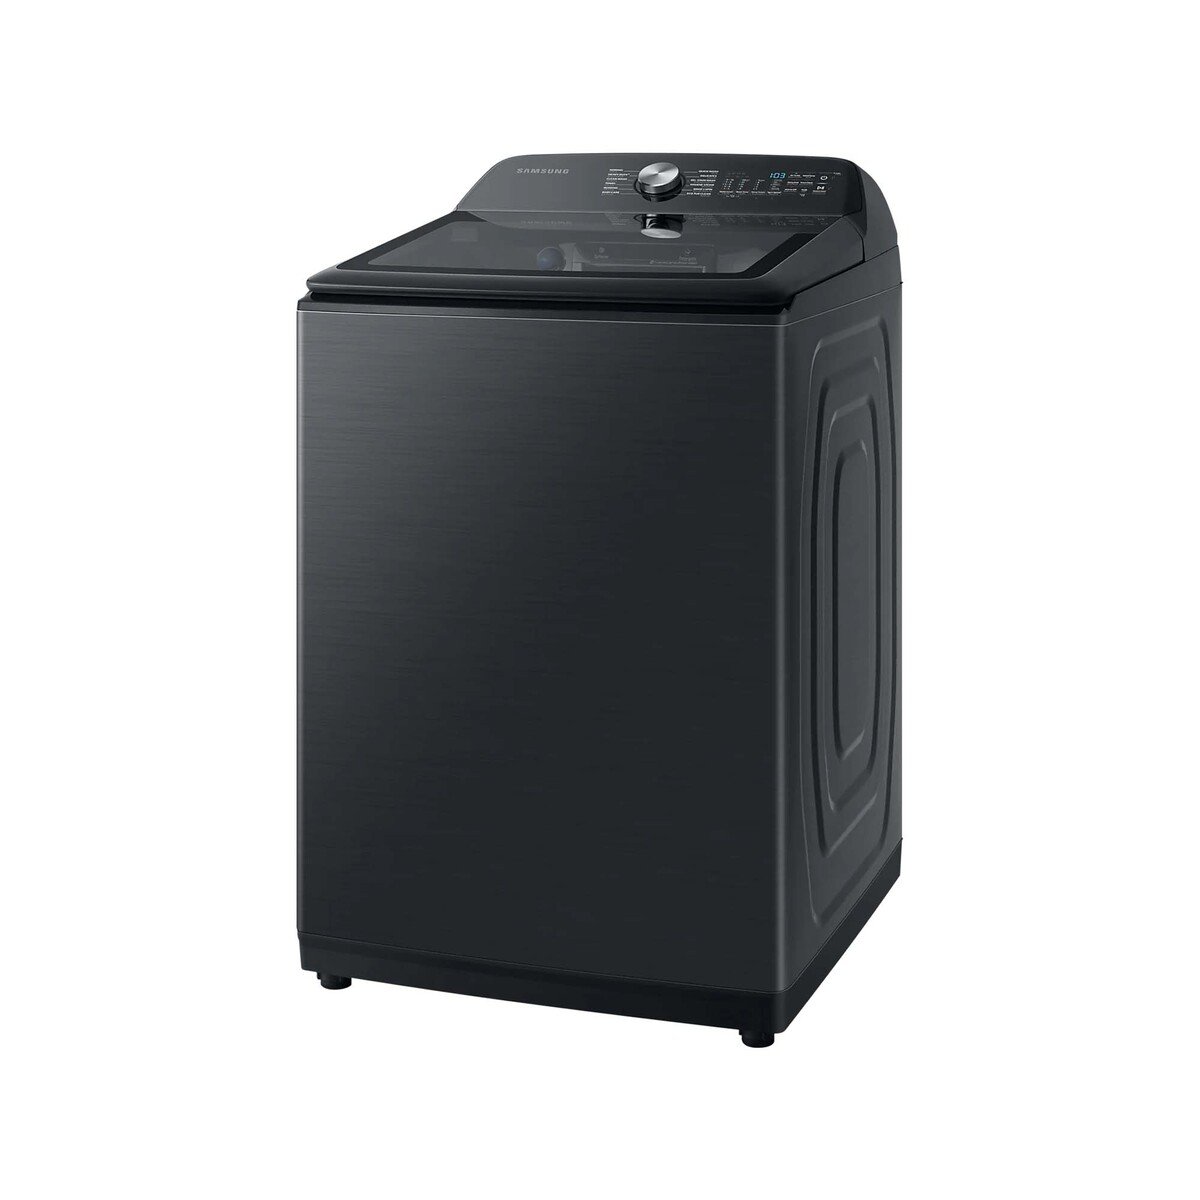 Samsung Top Load Washing Machine WA18A8376GV 18KG